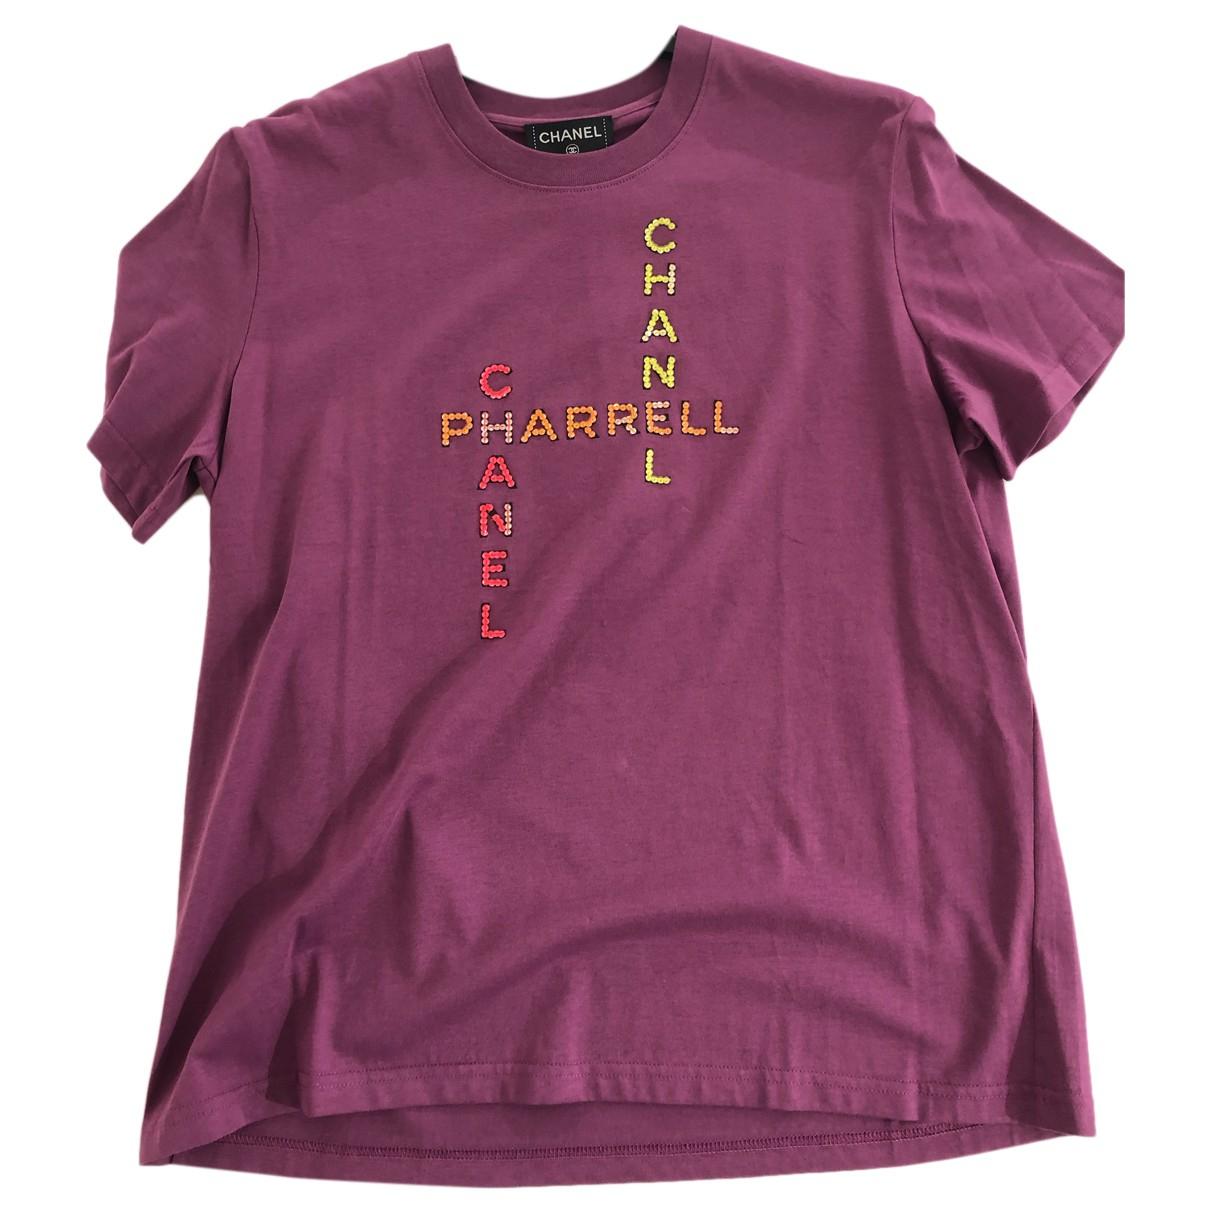 T-shirt Chanel x Pharrell Williams Purple size M International in Cotton -  17896486